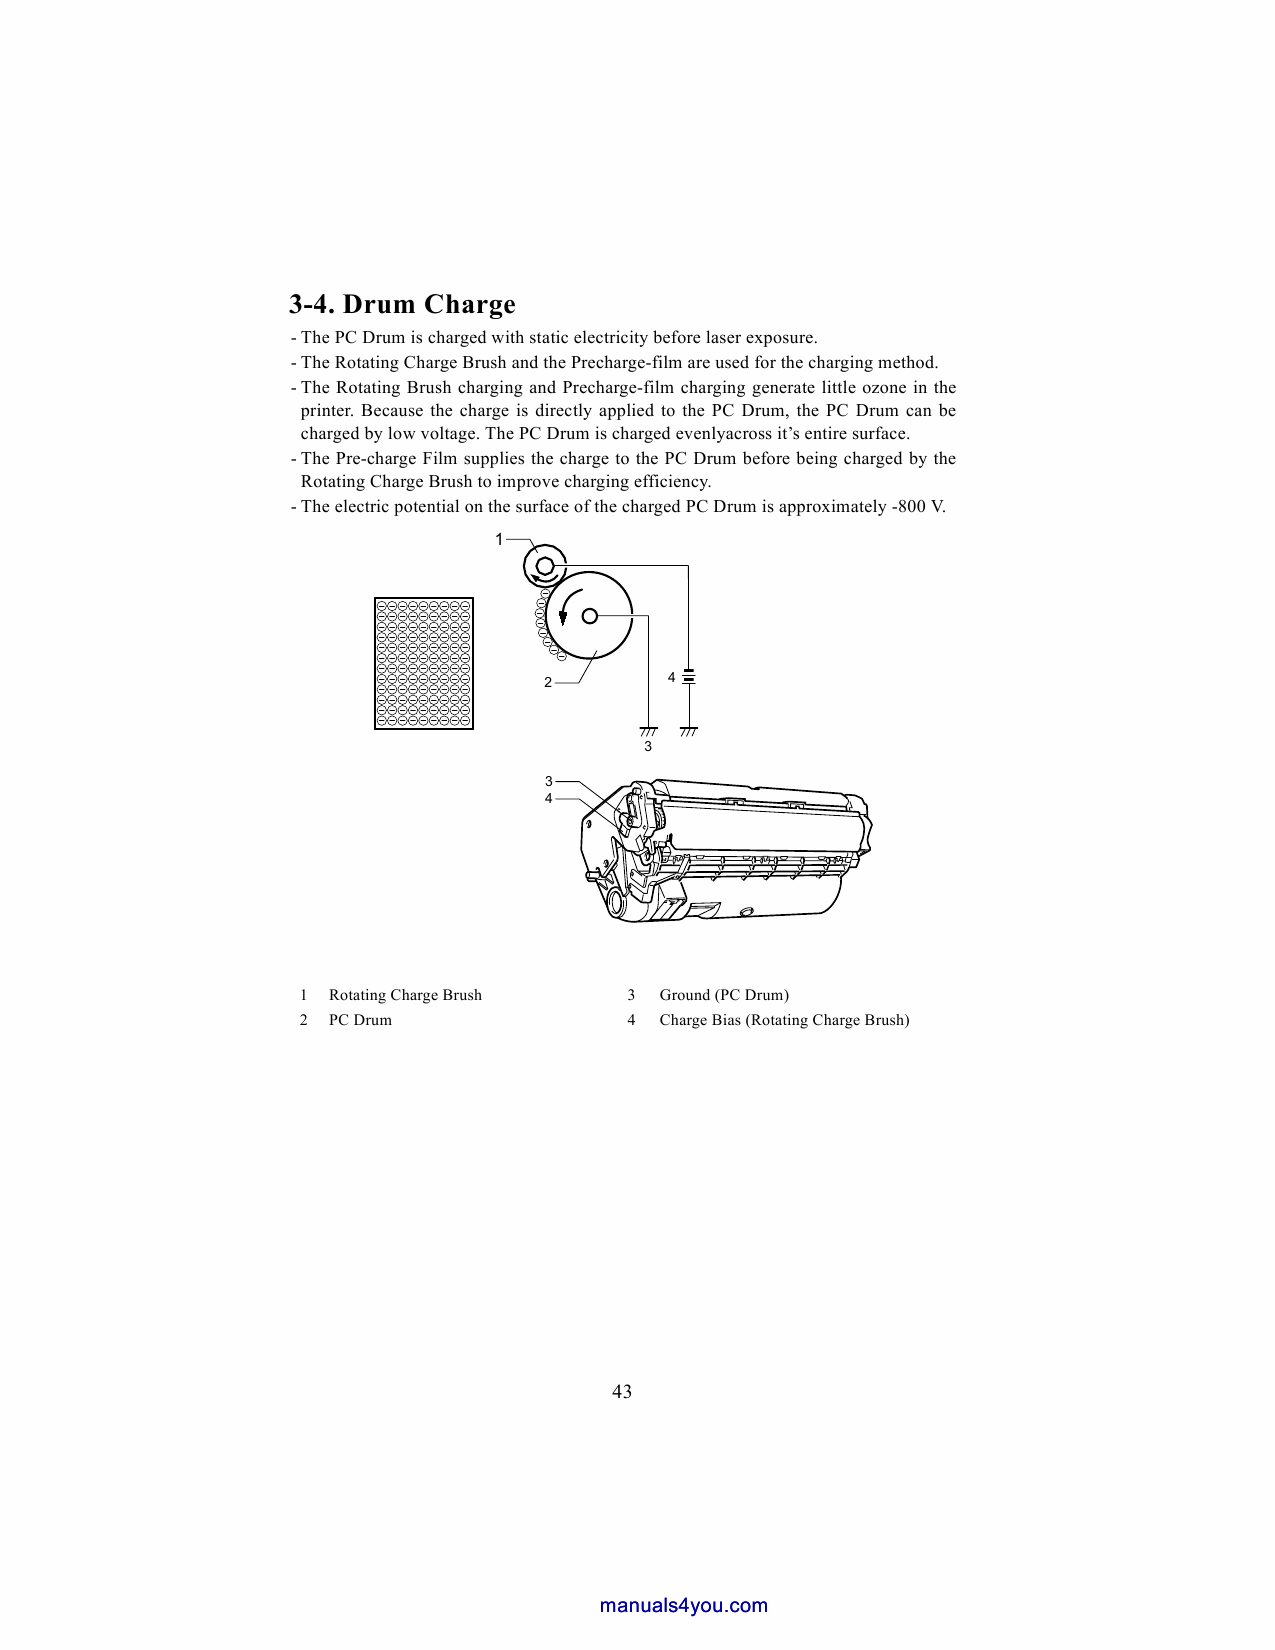 Konica-Minolta pagepro 4100 Parts Manual-5